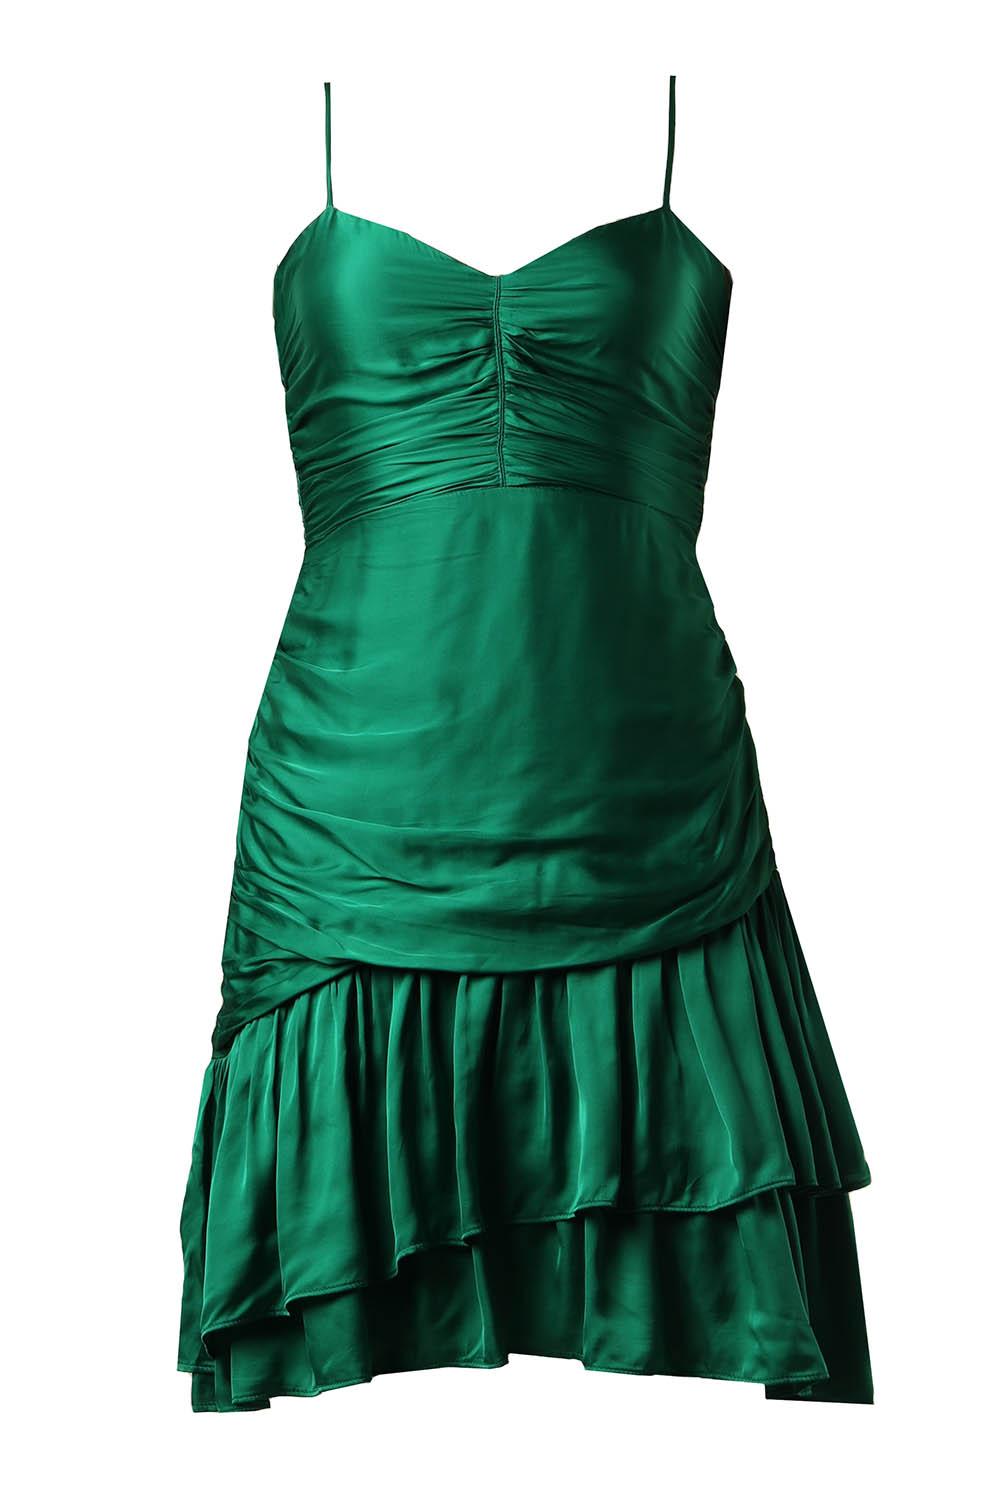 Suncoo Satijnen viscose jurk Cordoue groen